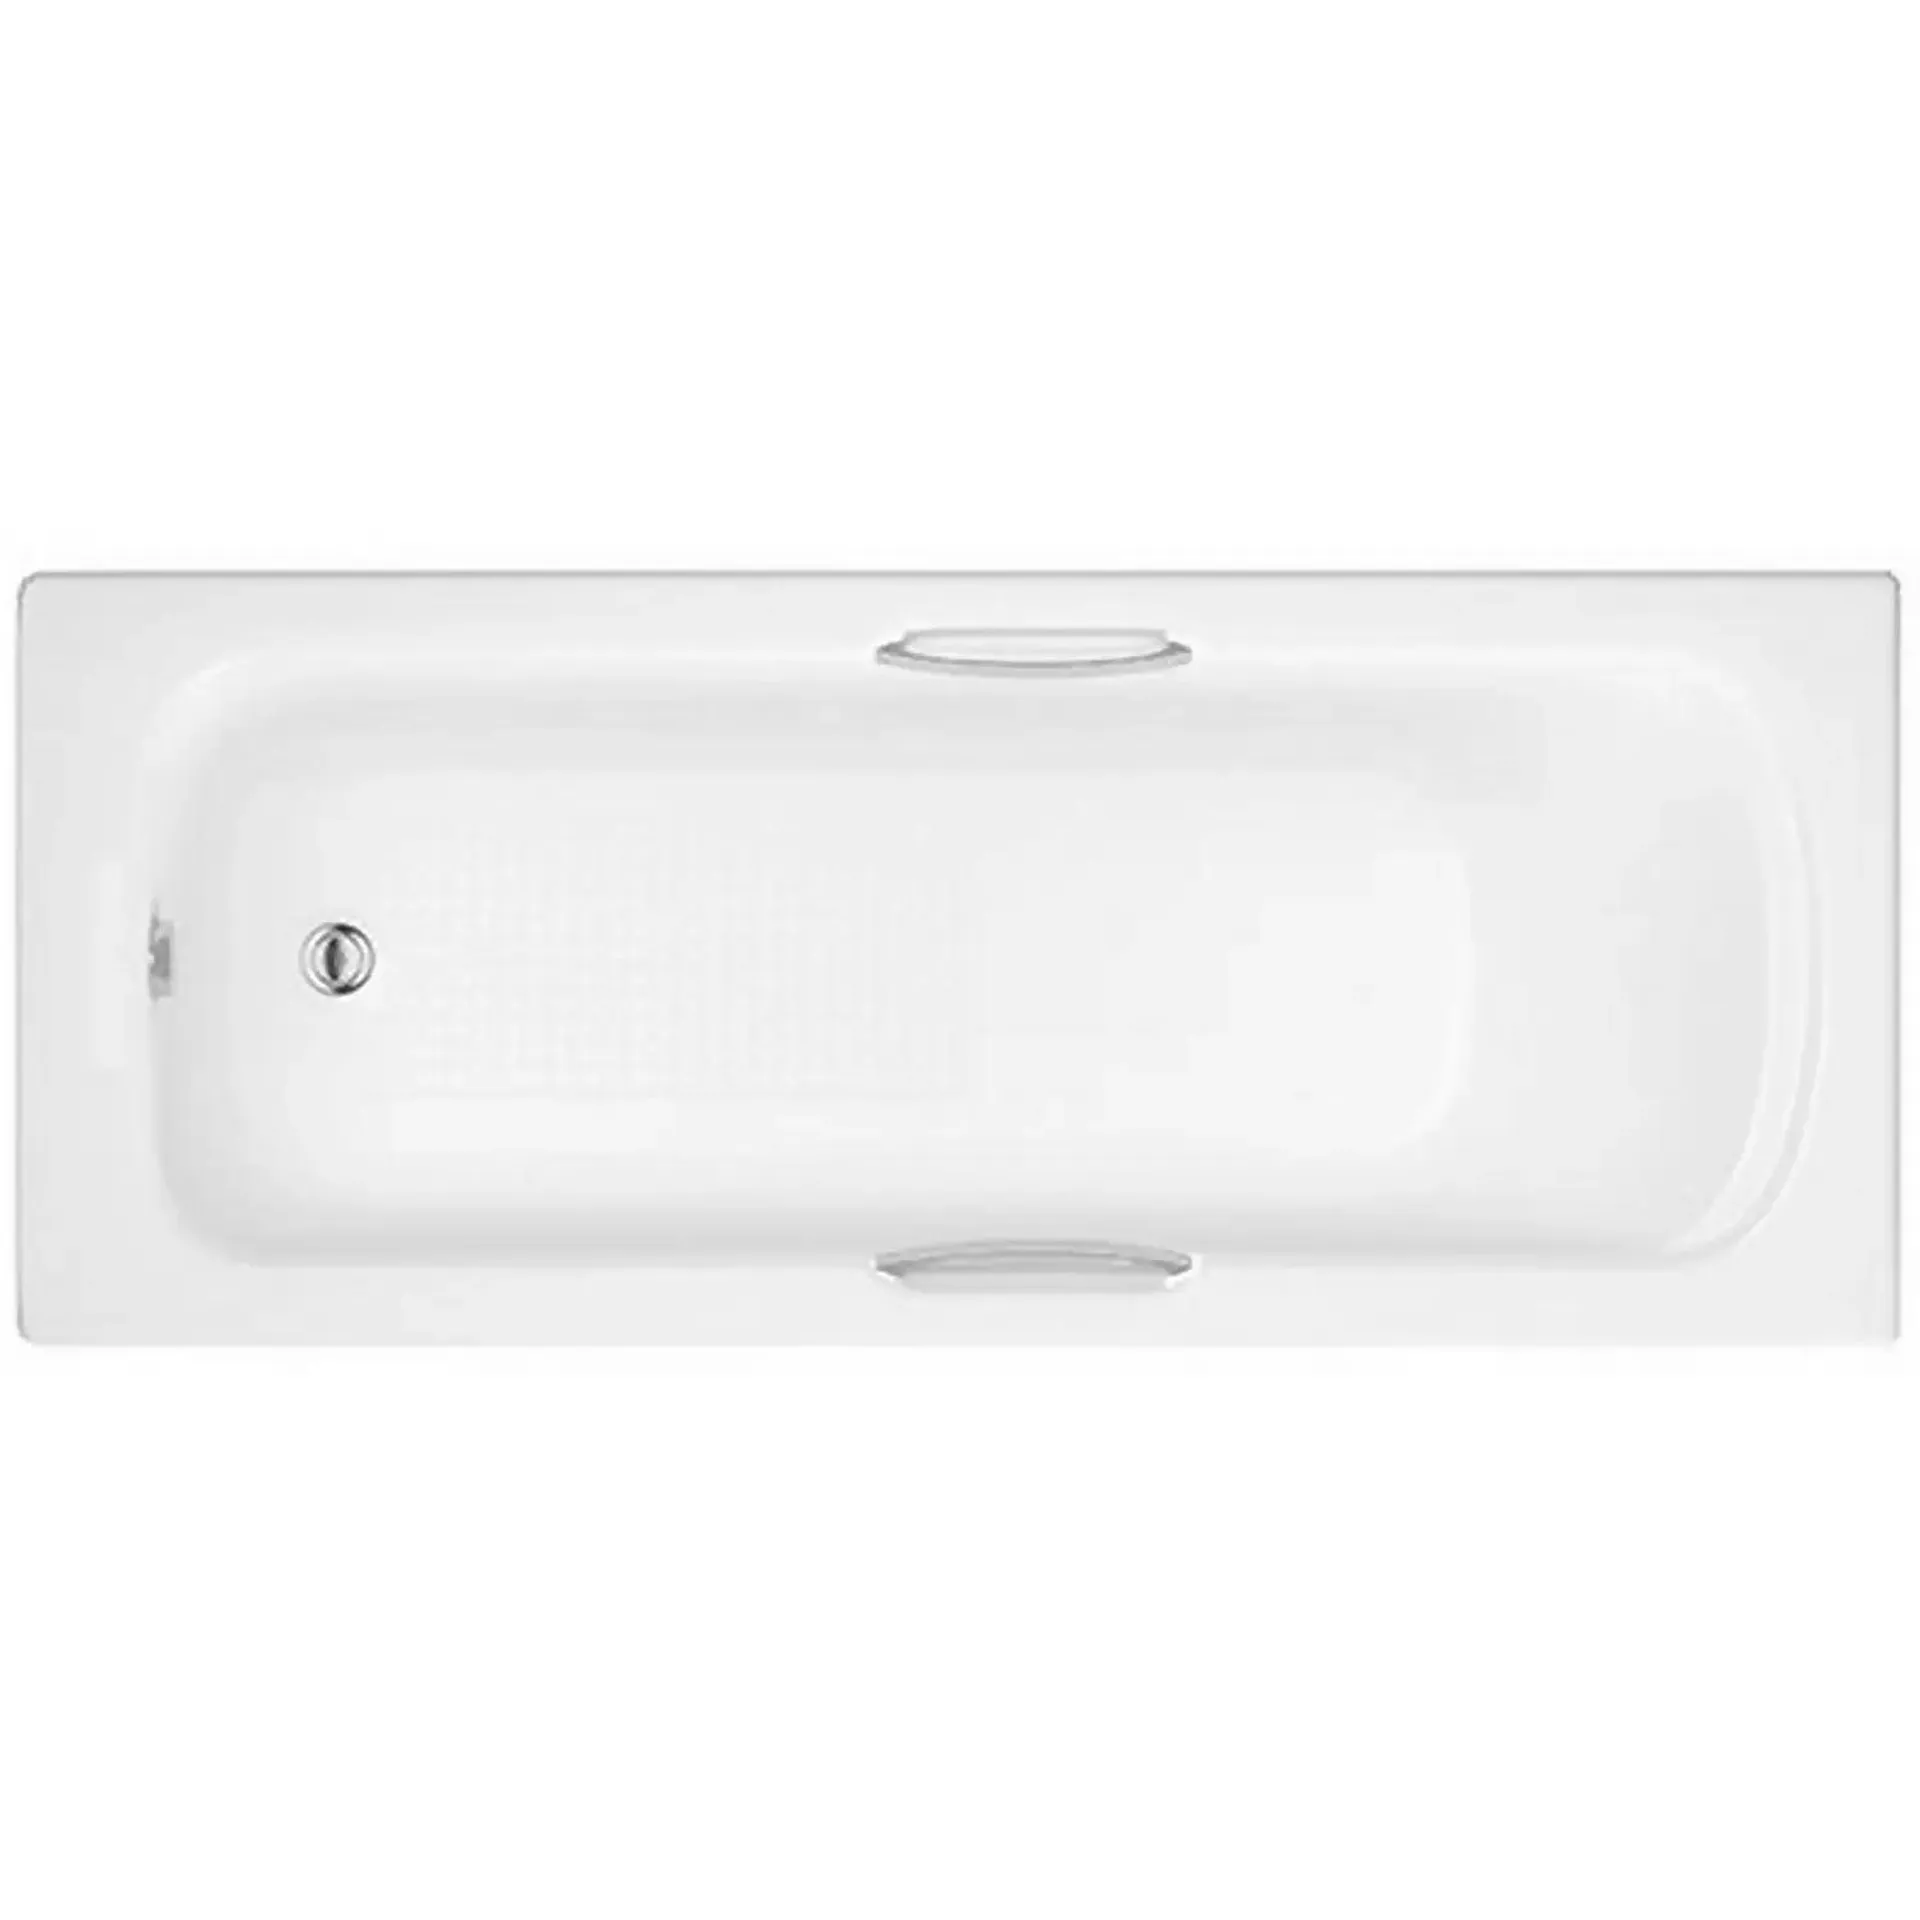 Claro White Straight Bath with Grips - 1700 x 700mm